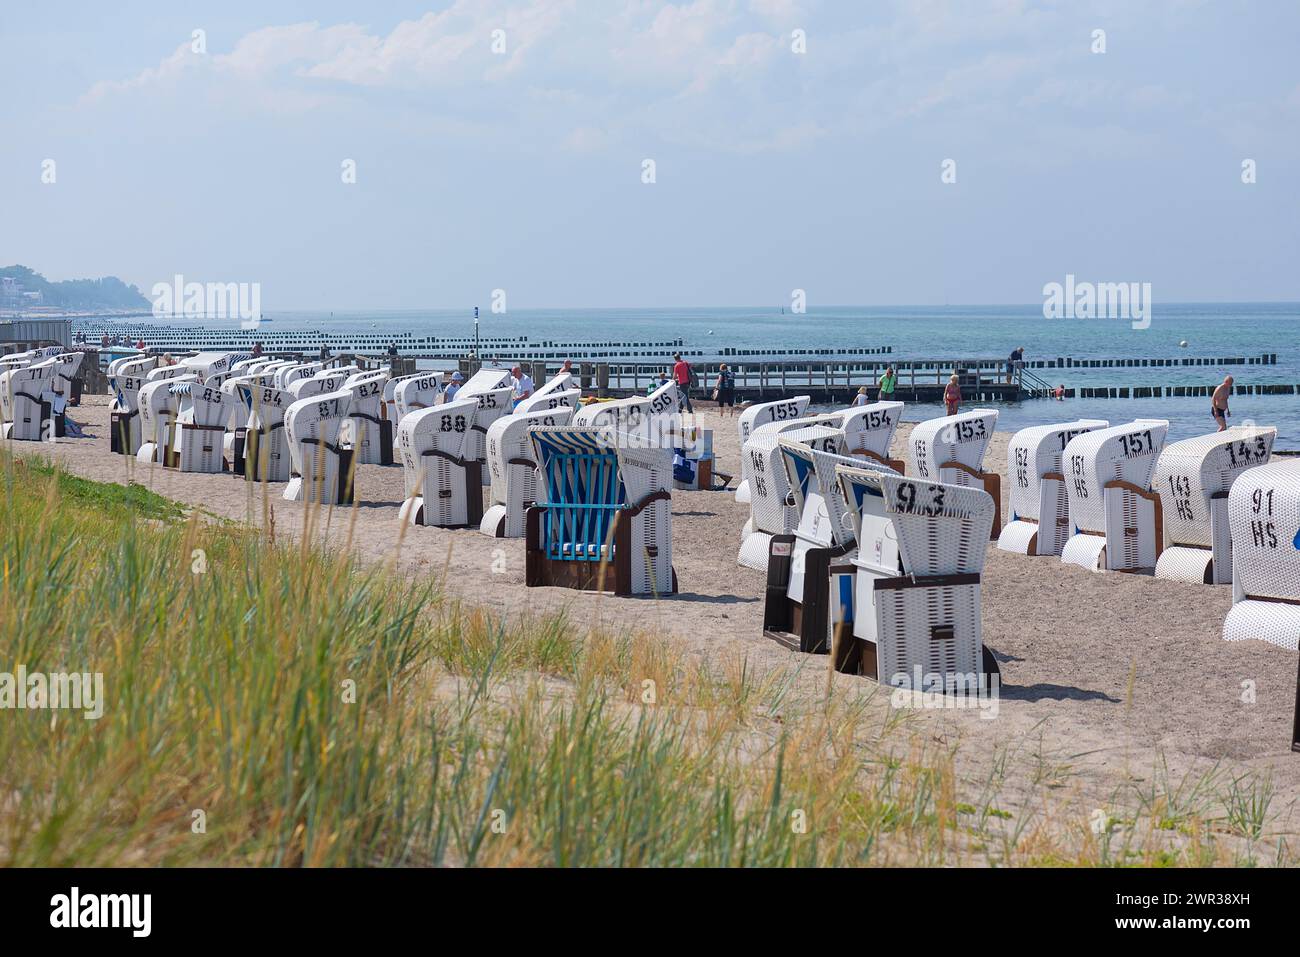 Beach chairs on the beach, behind groynes, Kuehlungsborn, Mecklenburg-Vorpommern, Germany Stock Photo